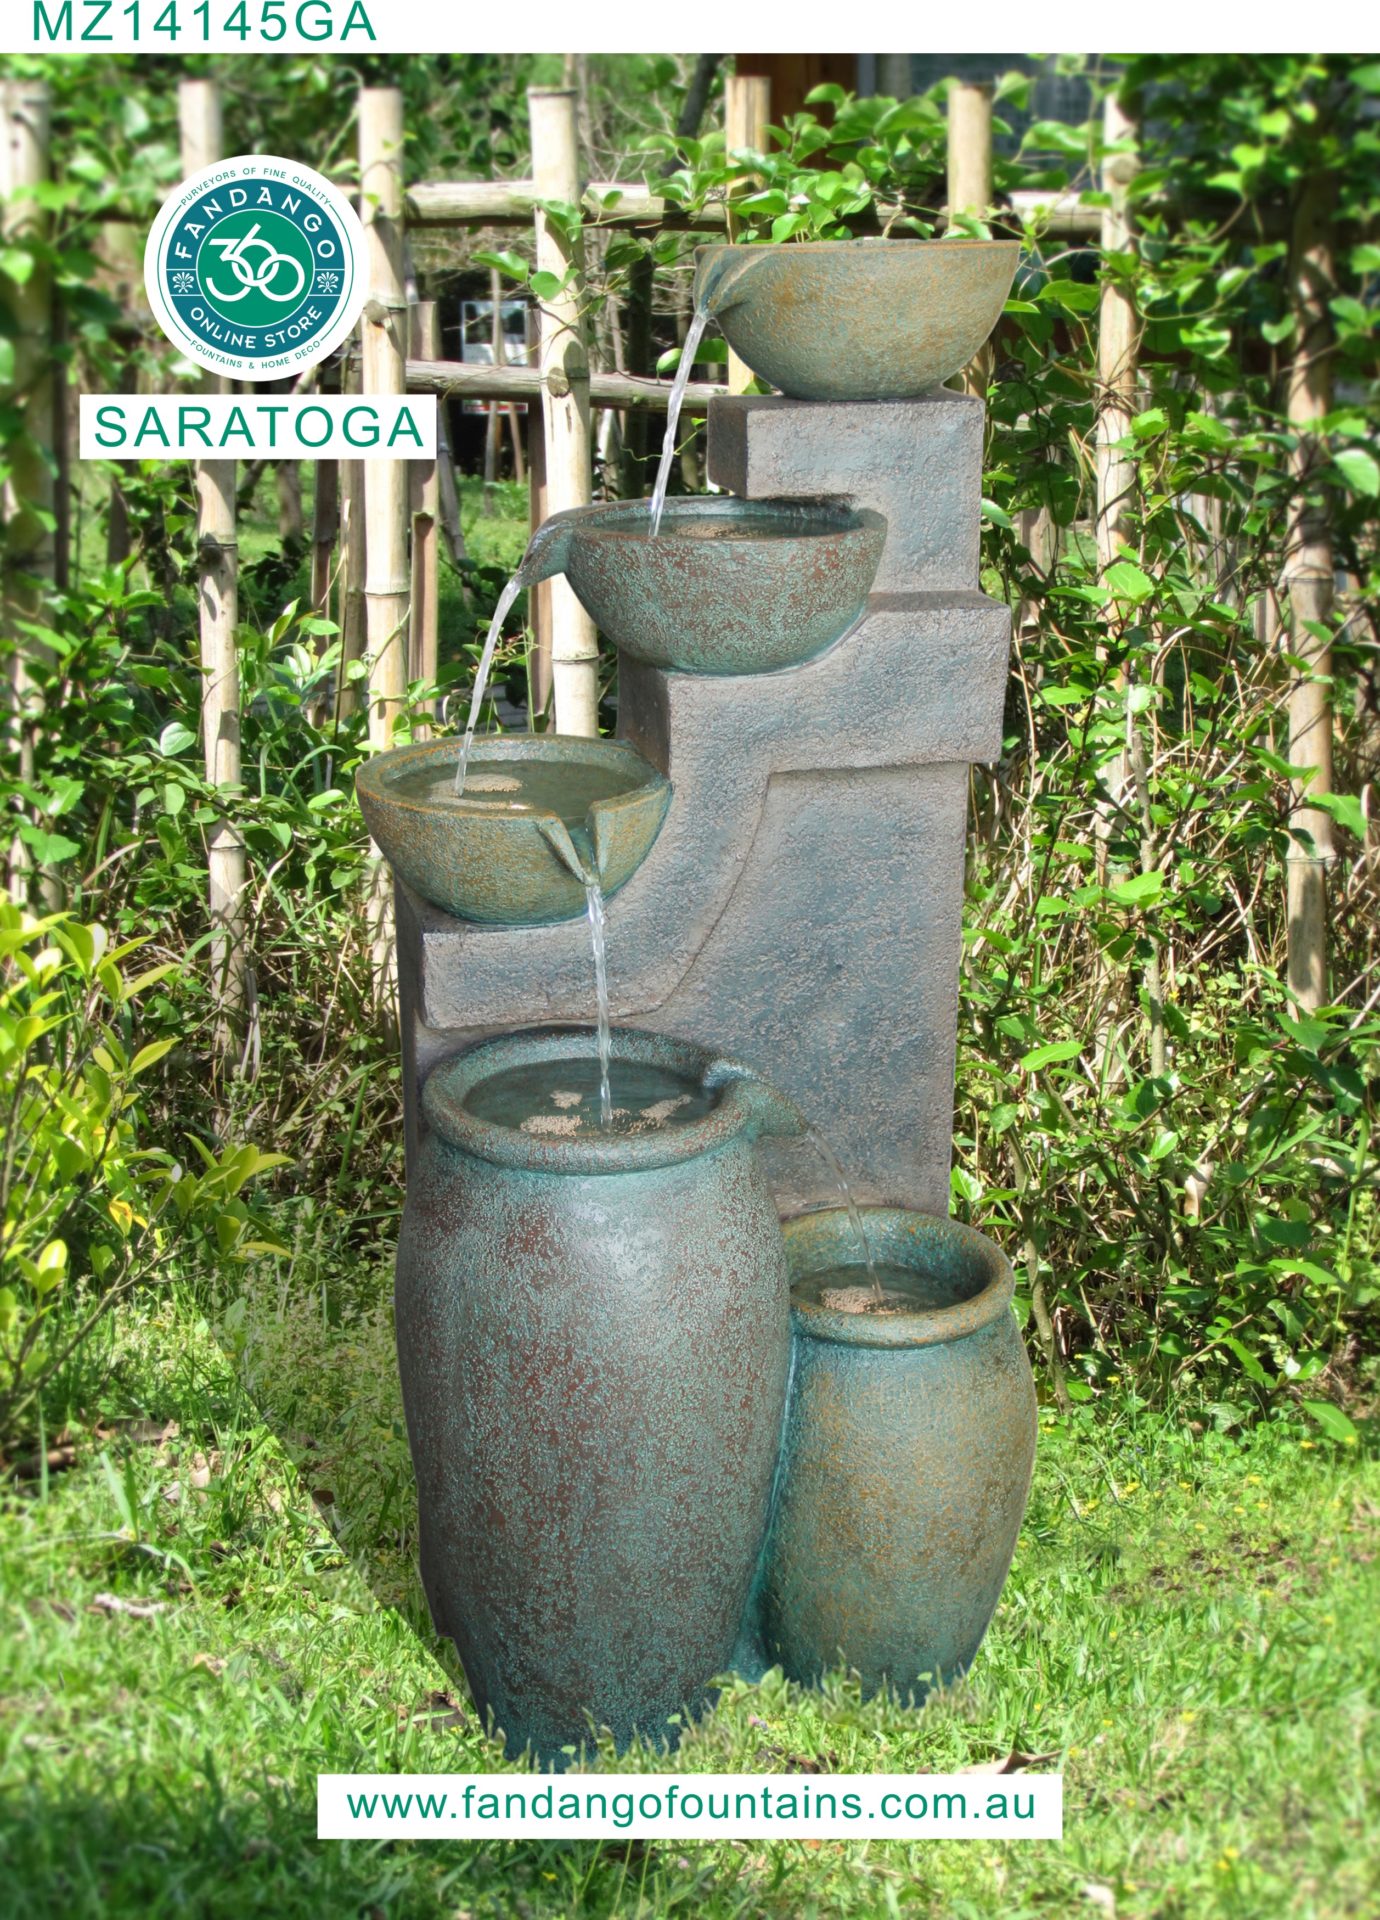 SARATOGA Designer Water Feature - Fandango Fountains